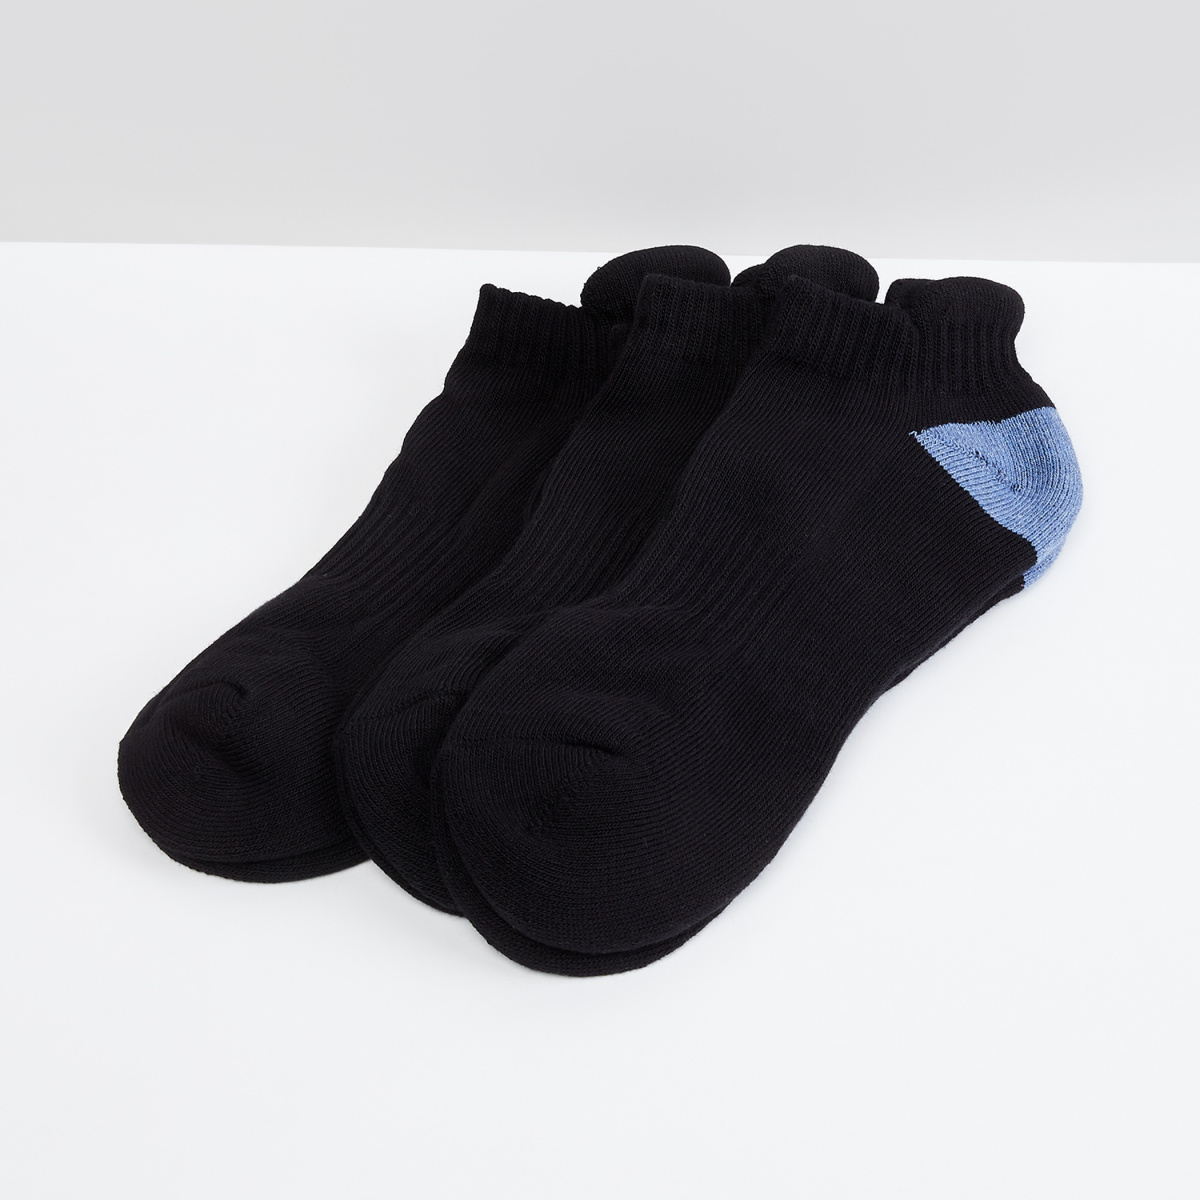 MAX Patterned Ankle-Length Socks - Set of 3